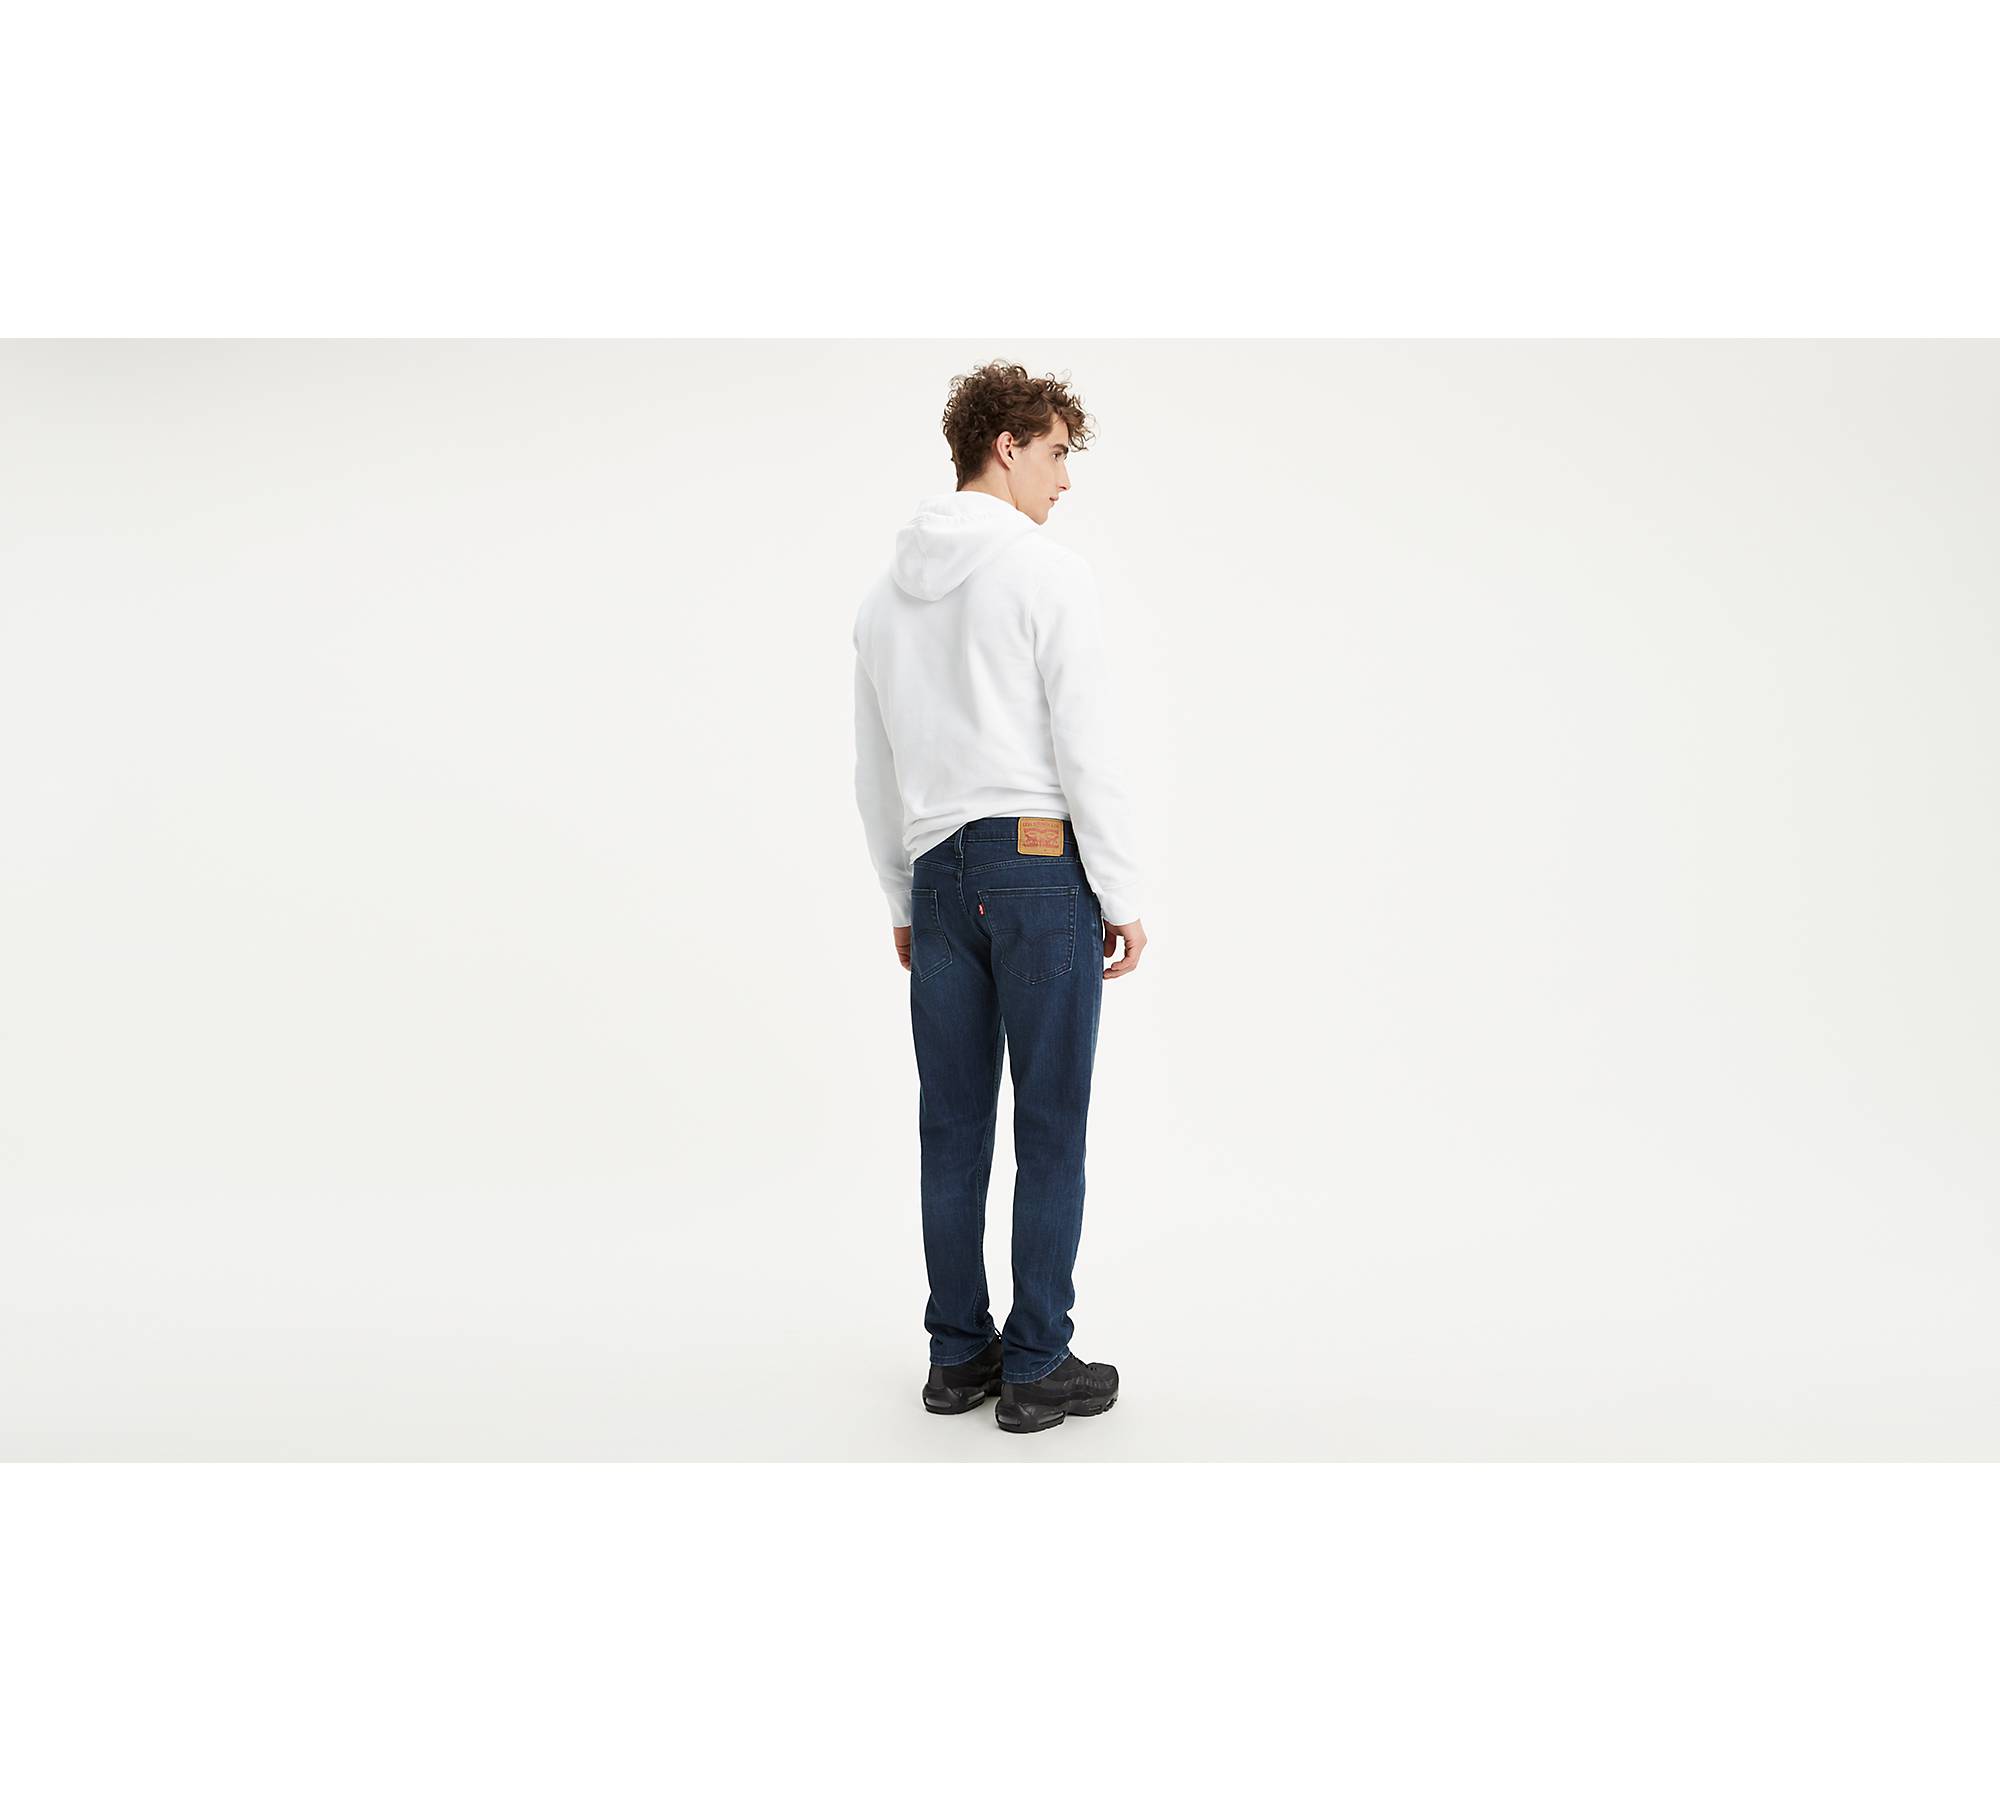 502™ Taper Fit Men's Jeans - Dark Wash | Levi's® US